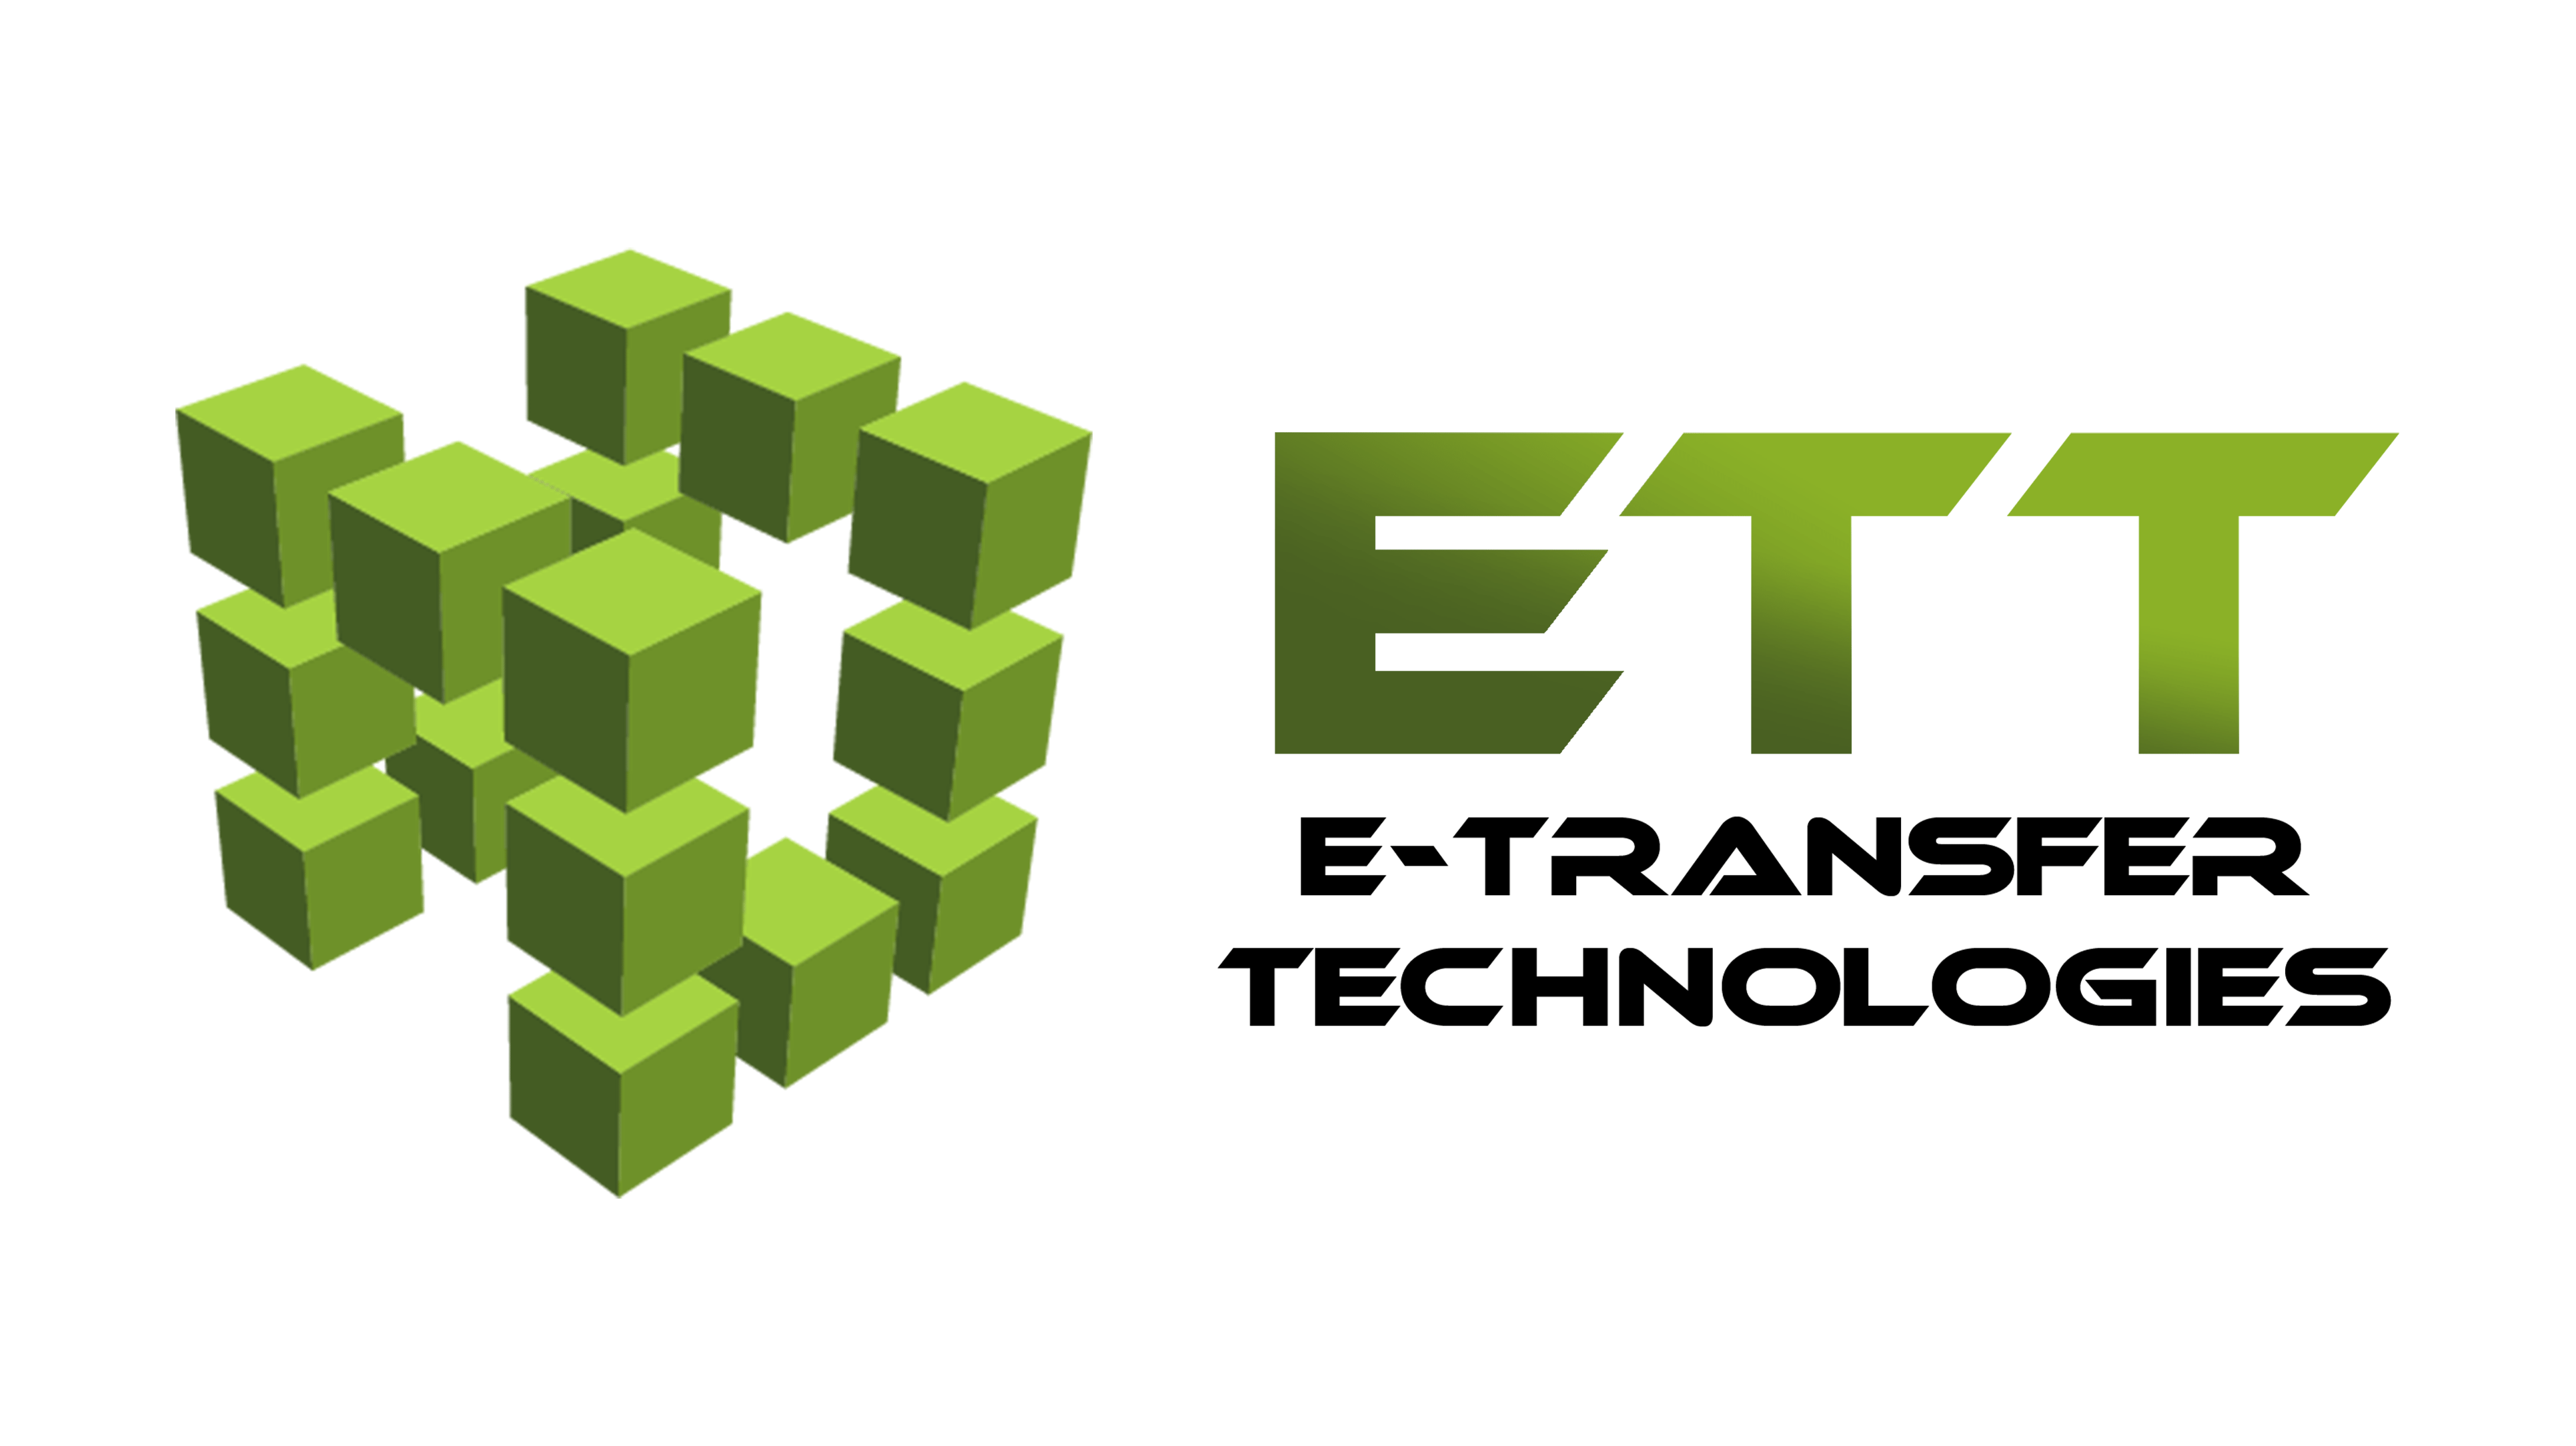 E-Transfer Technologies